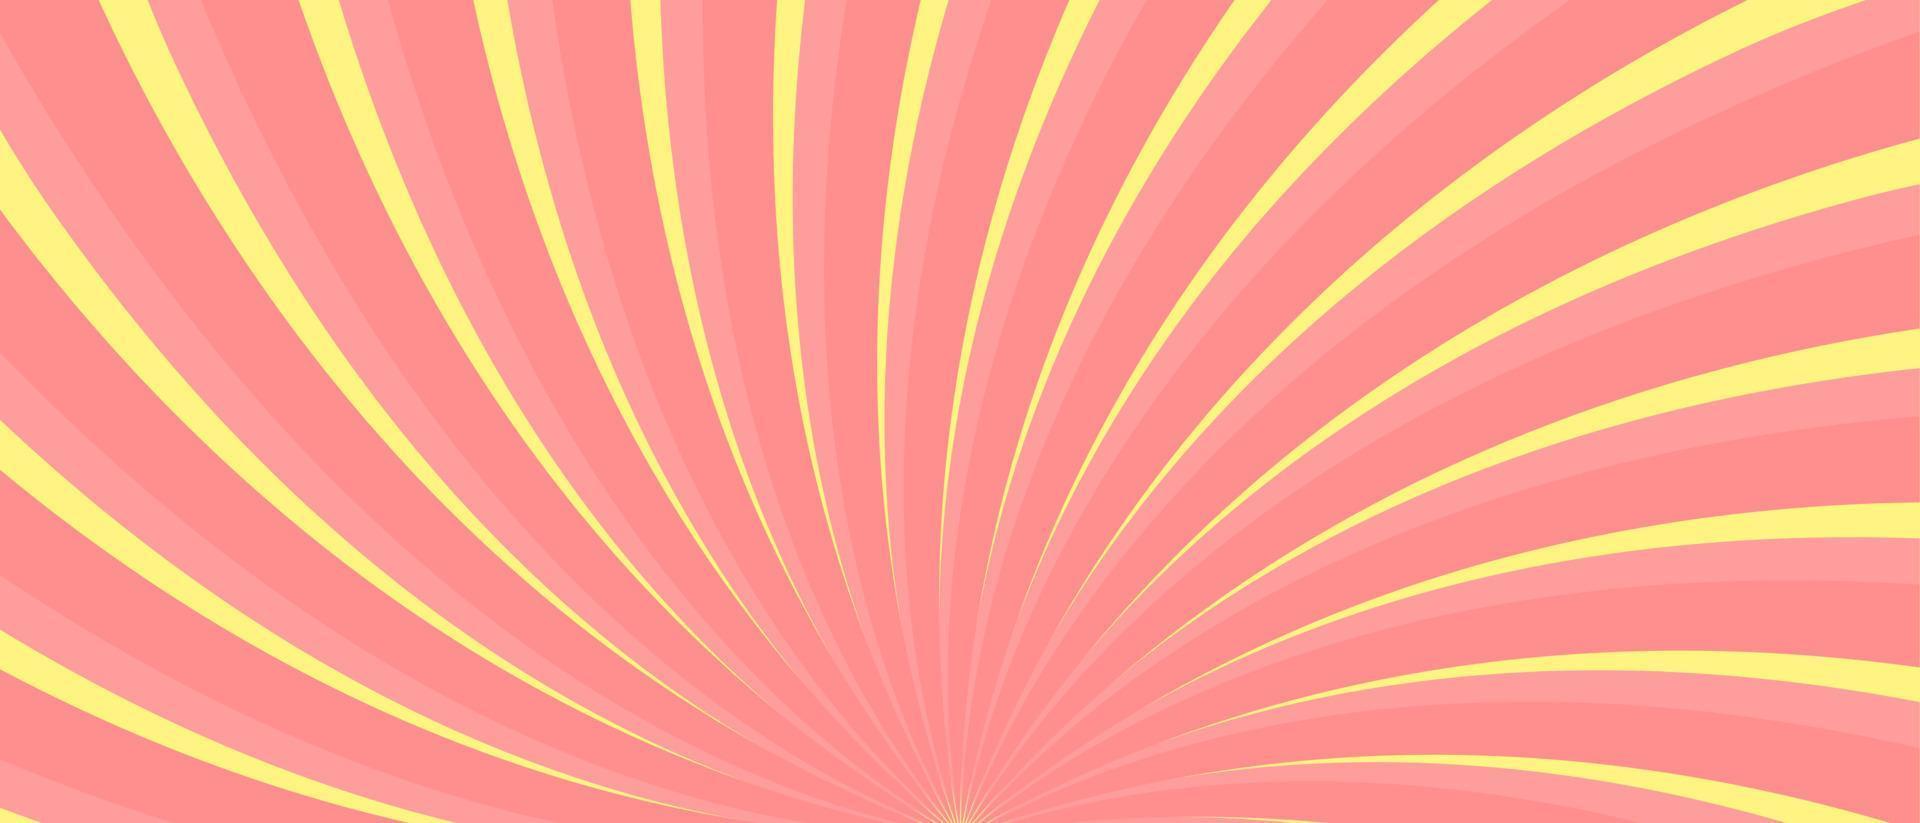 Rayons swirl sunburst line abstract background vector illustration